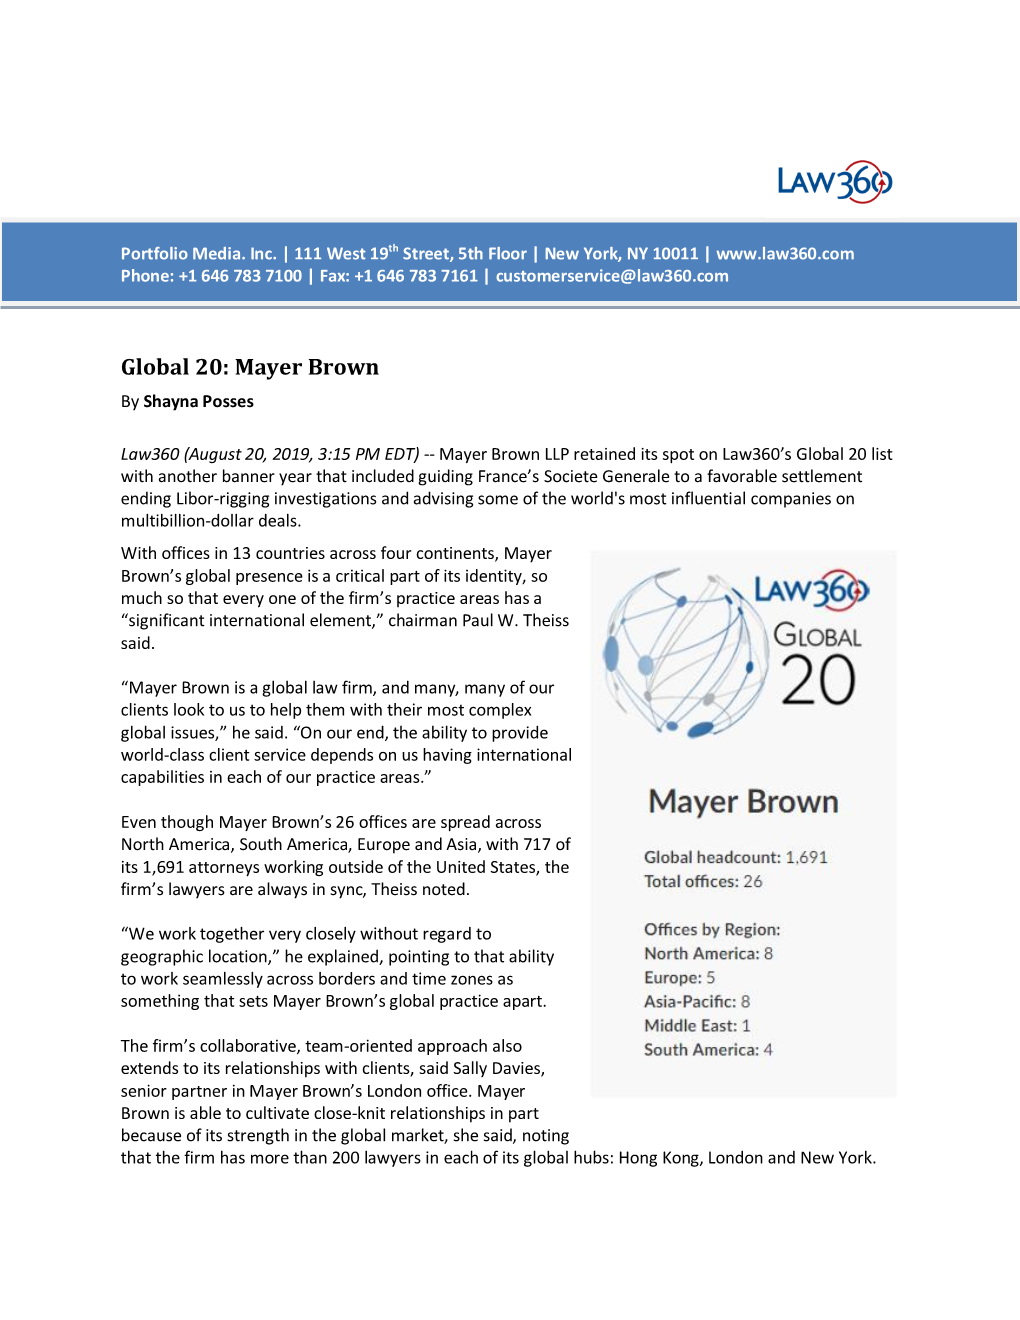 Global-20-Mayer-Brown.Pdf